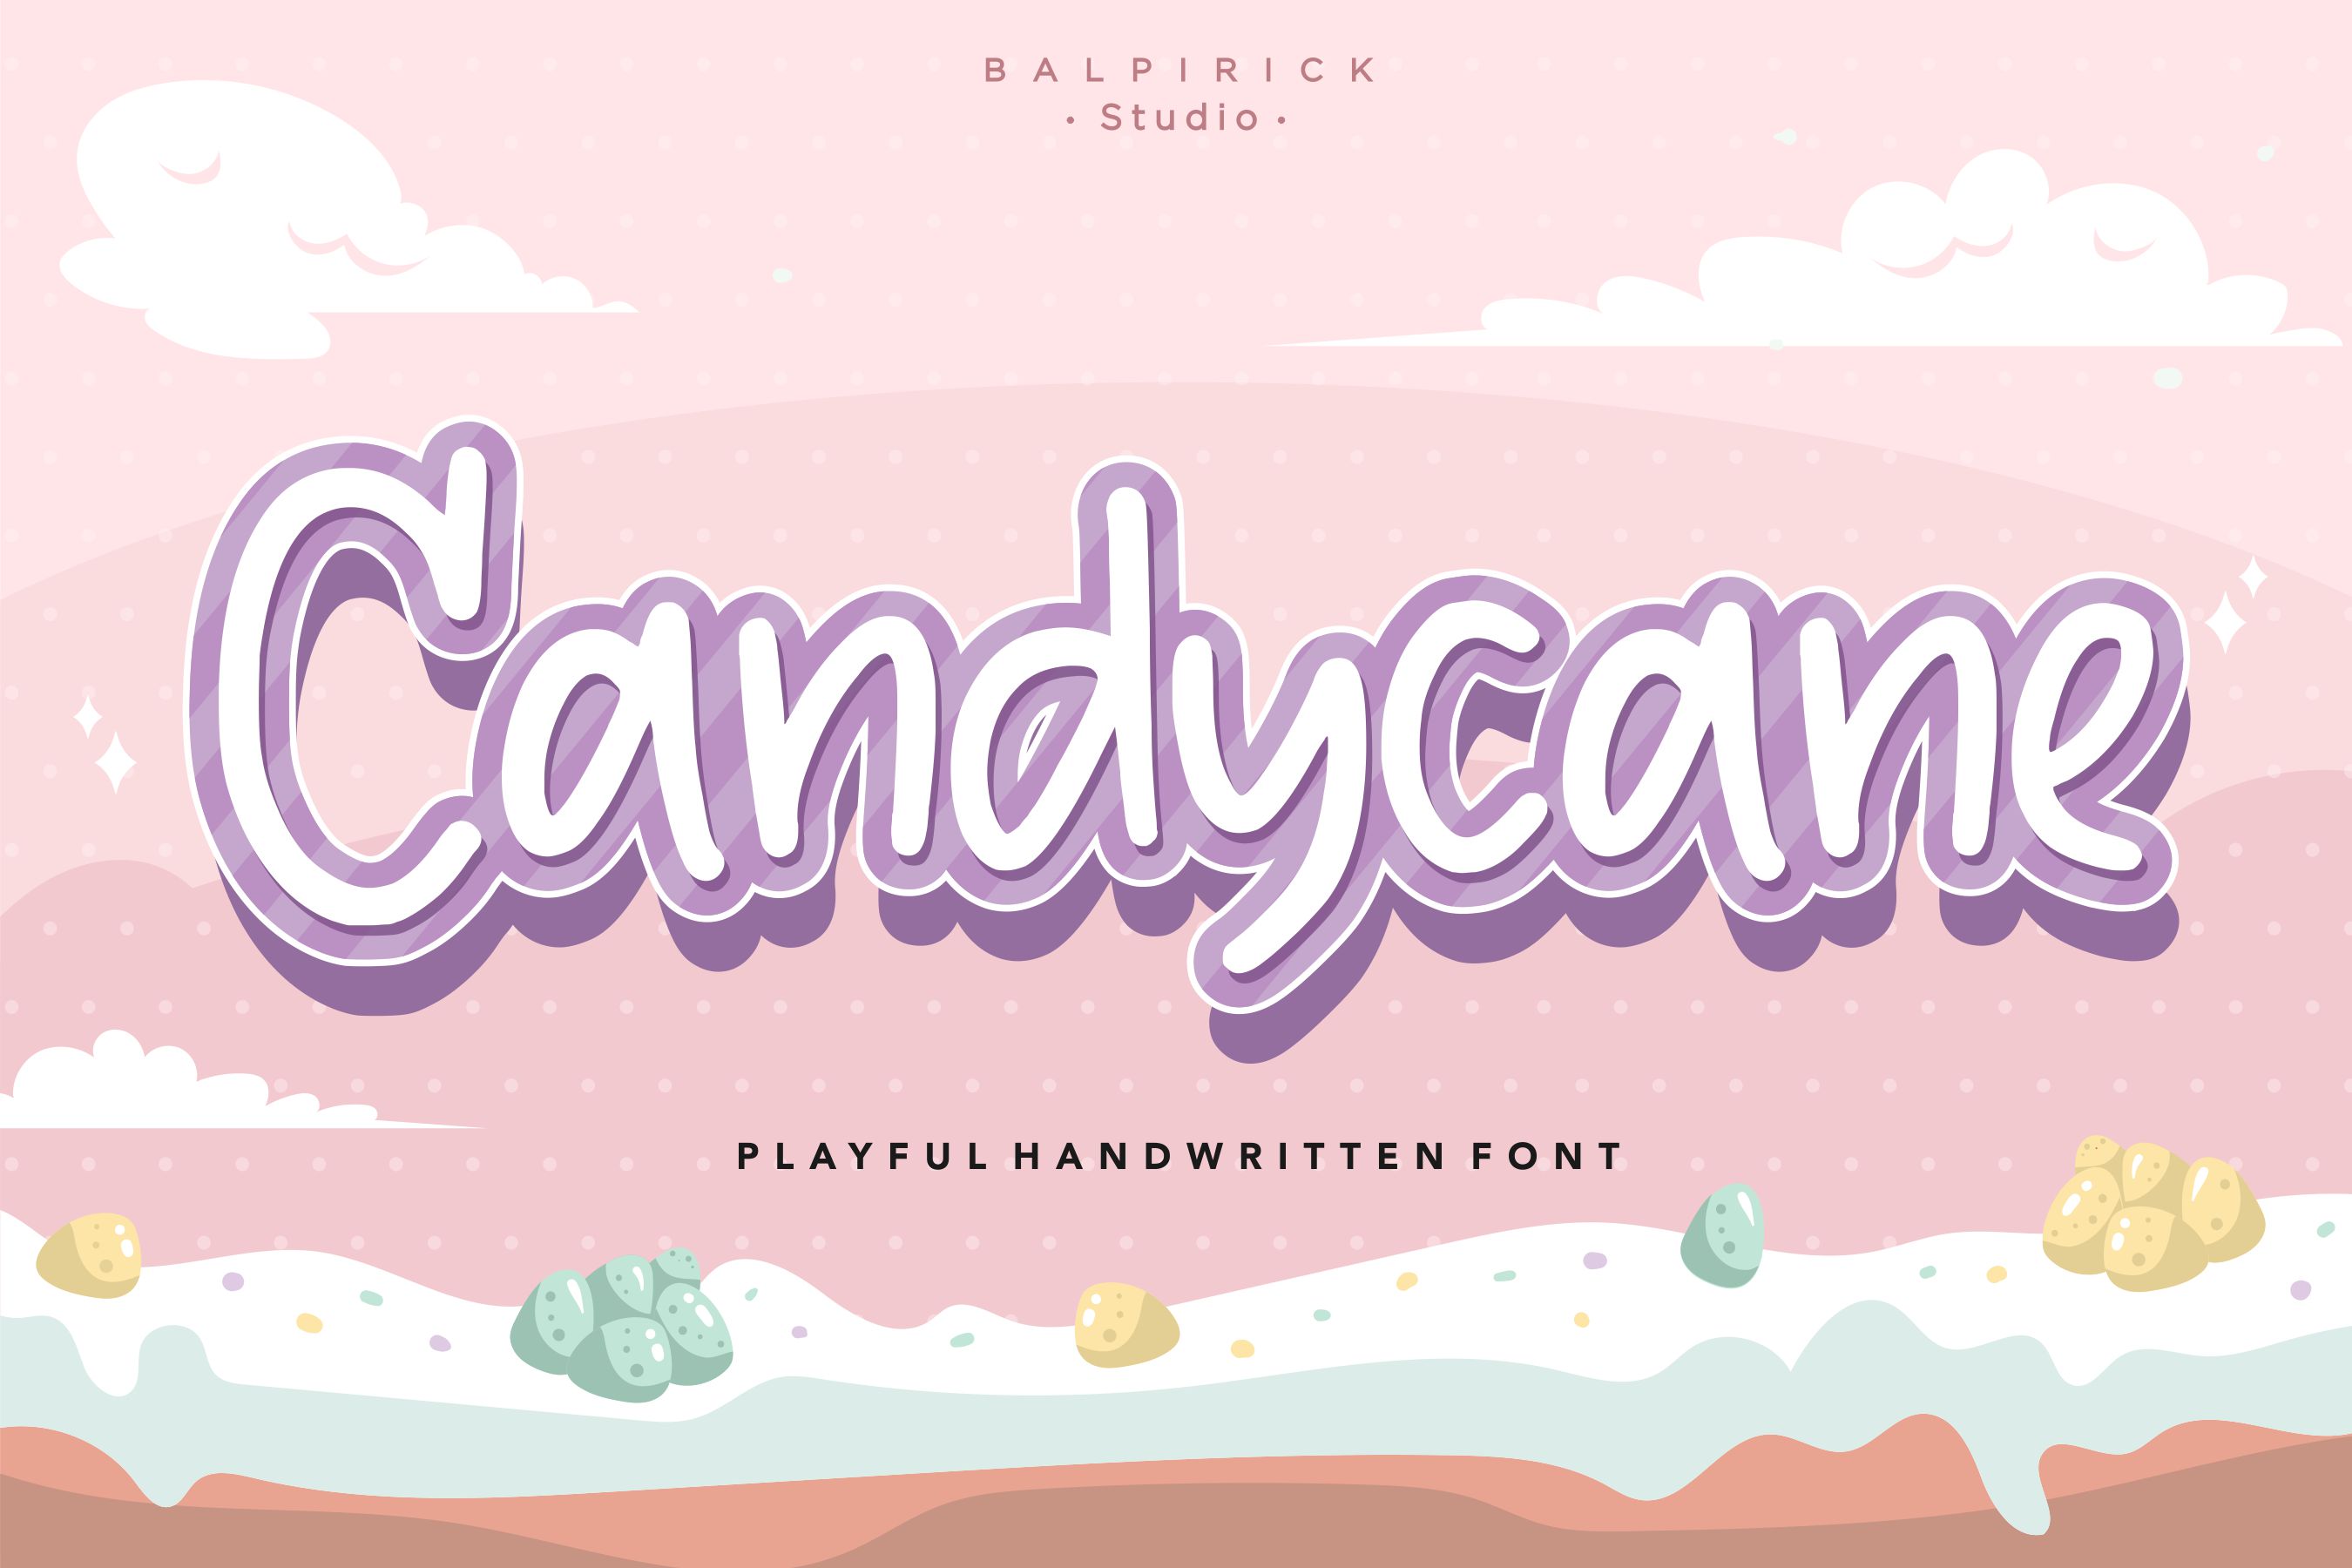 Candycane font